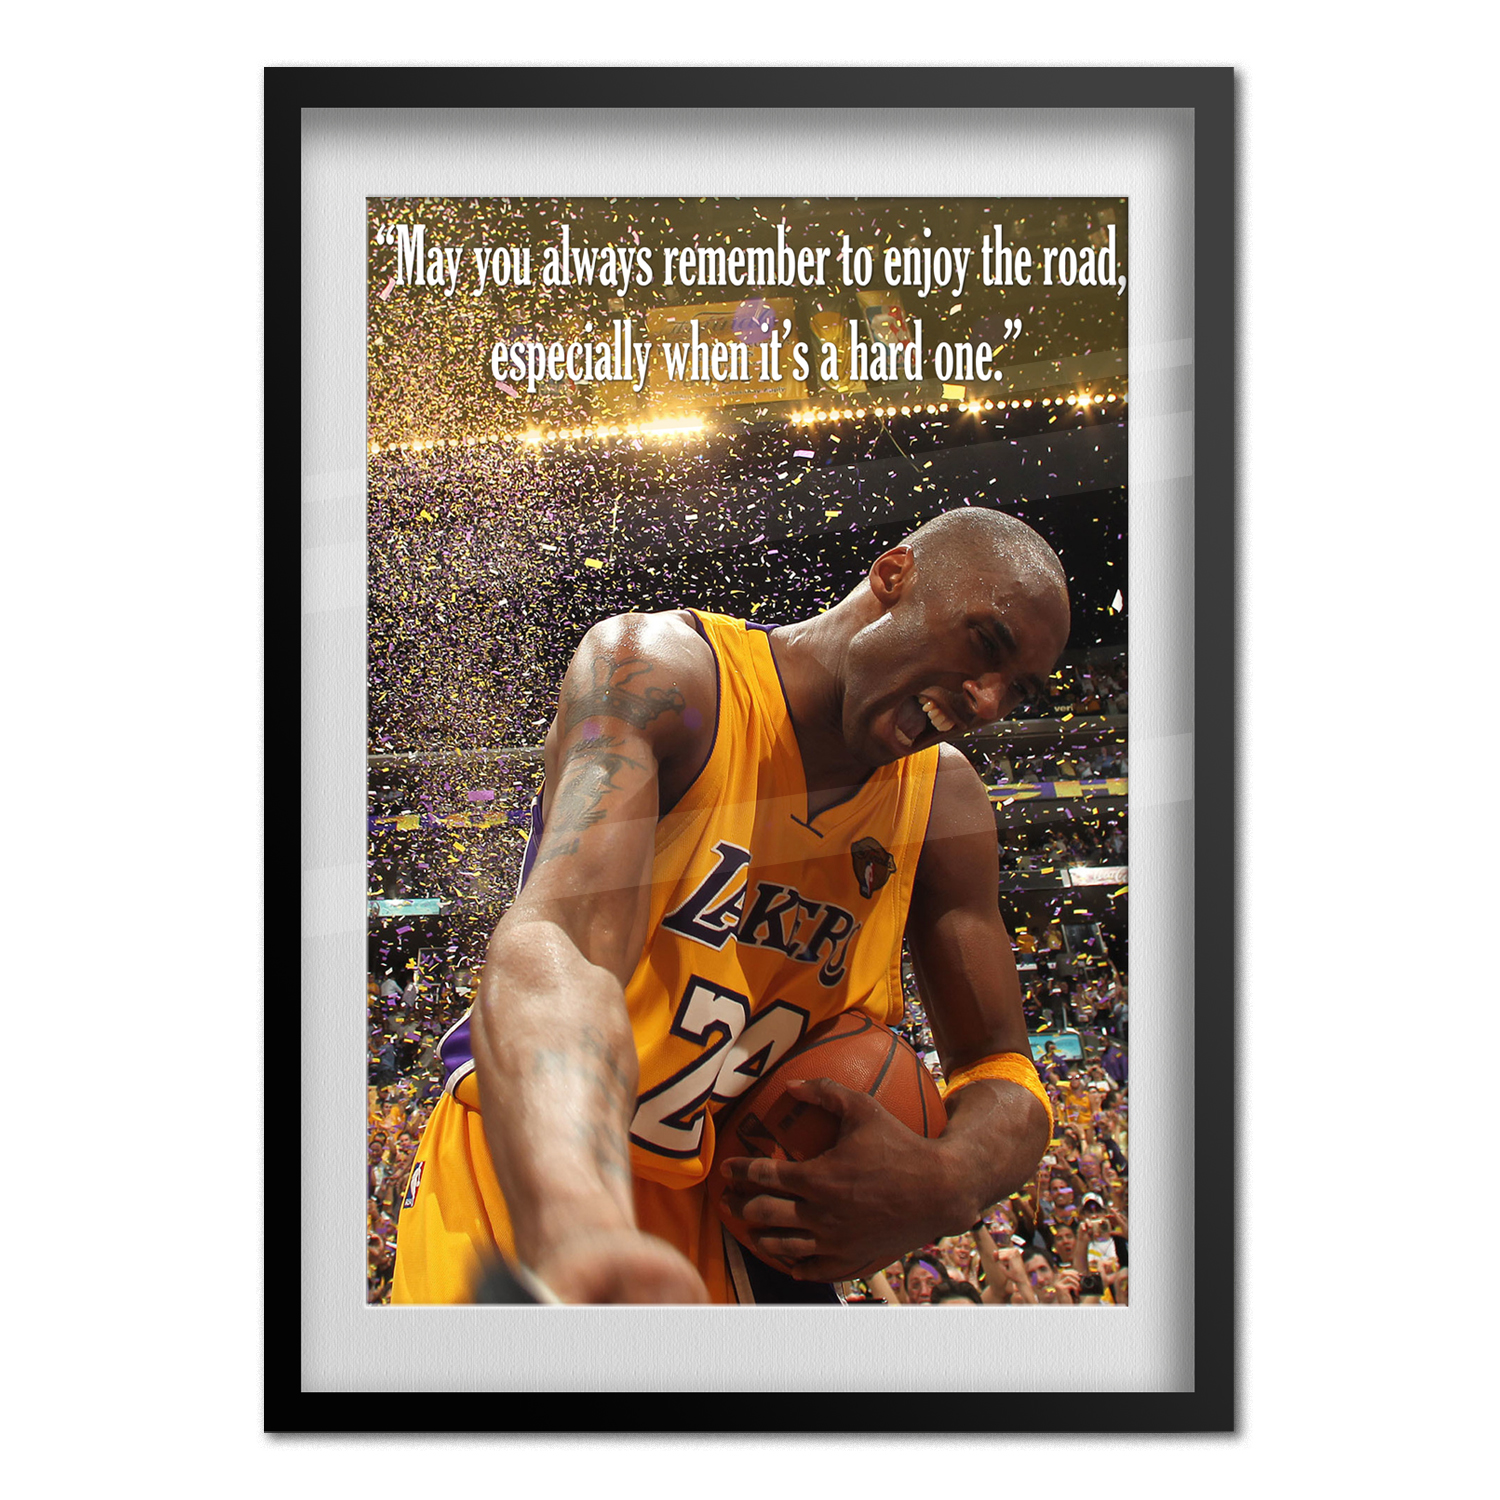 Kobe Bryant Poster Inspirational Wall Art | Mamba Mentality Quote |  Basketball Player Sports | Motivational Artwork For Home, Office, Gym Wall  Decor 13x19 - Walmart.com